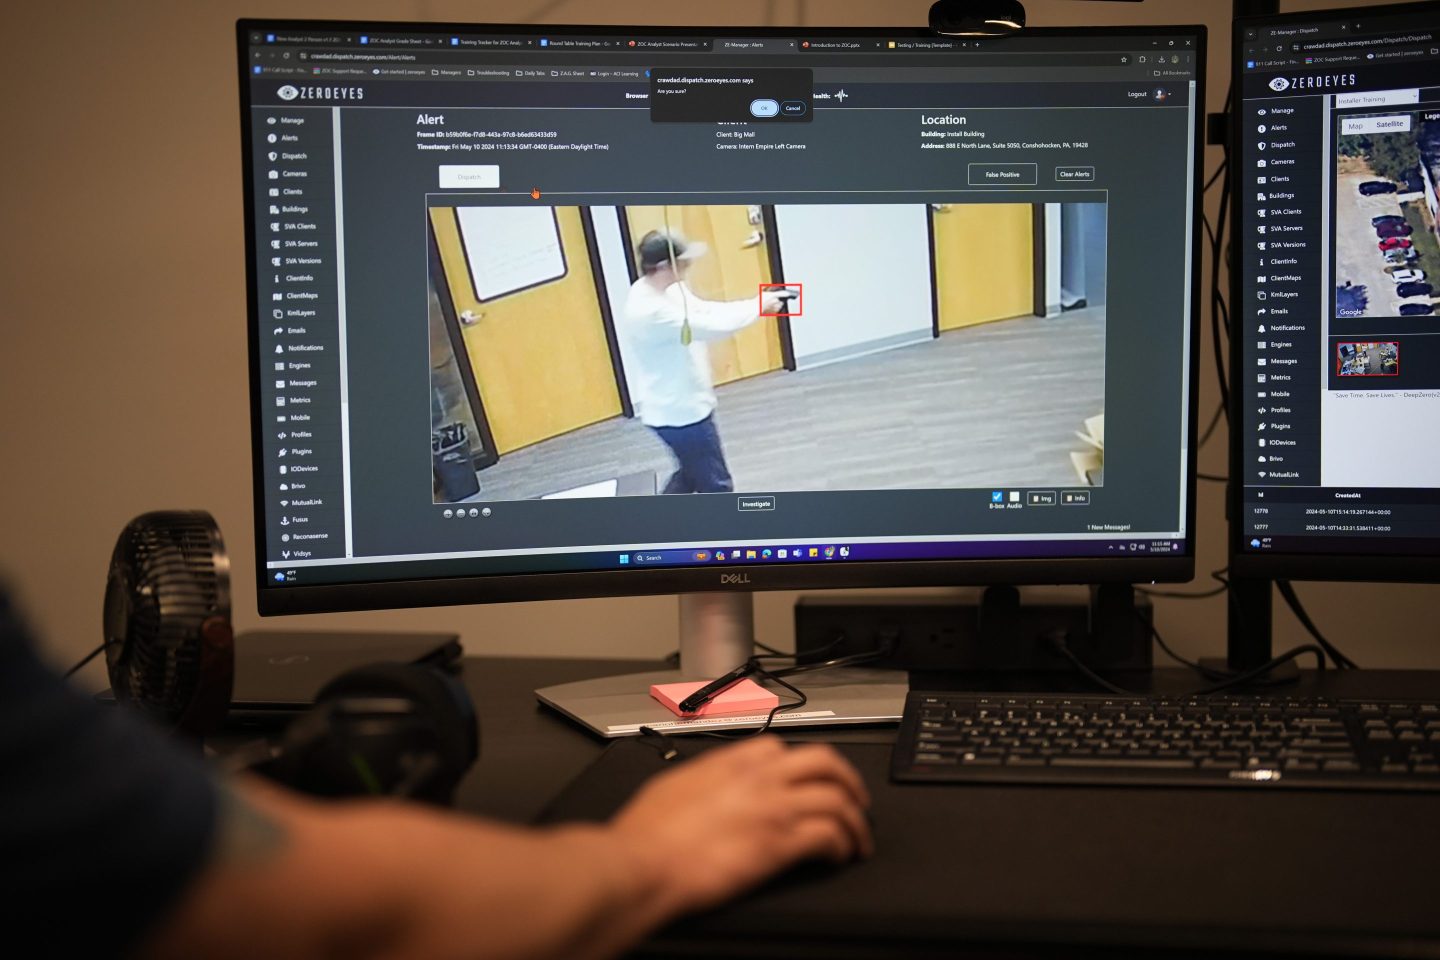 computer screen shows man holding gun